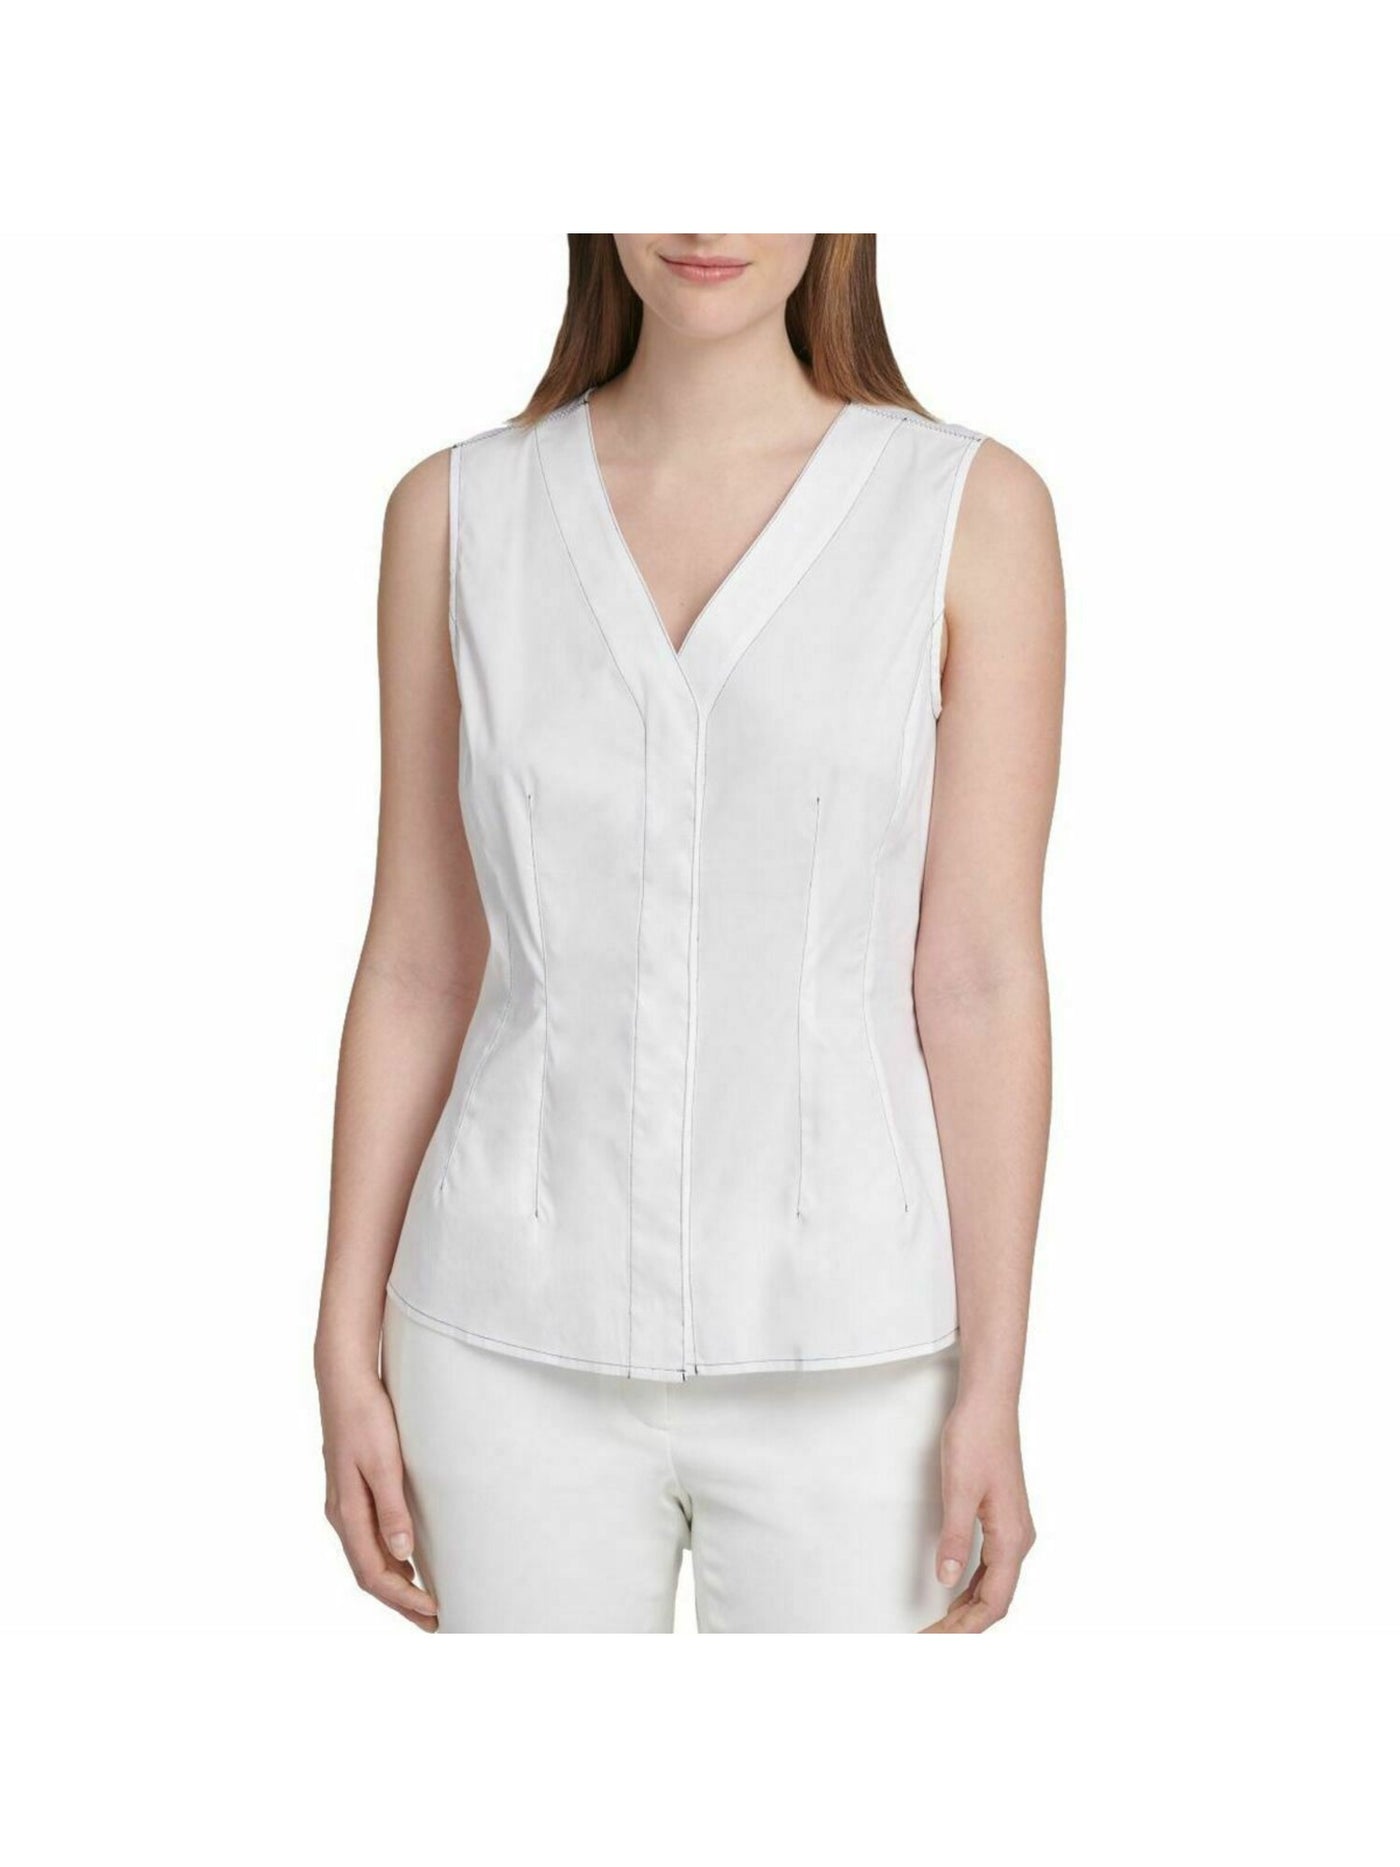 DKNY Womens White Sleeveless V Neck Wear To Work T-Shirt XS